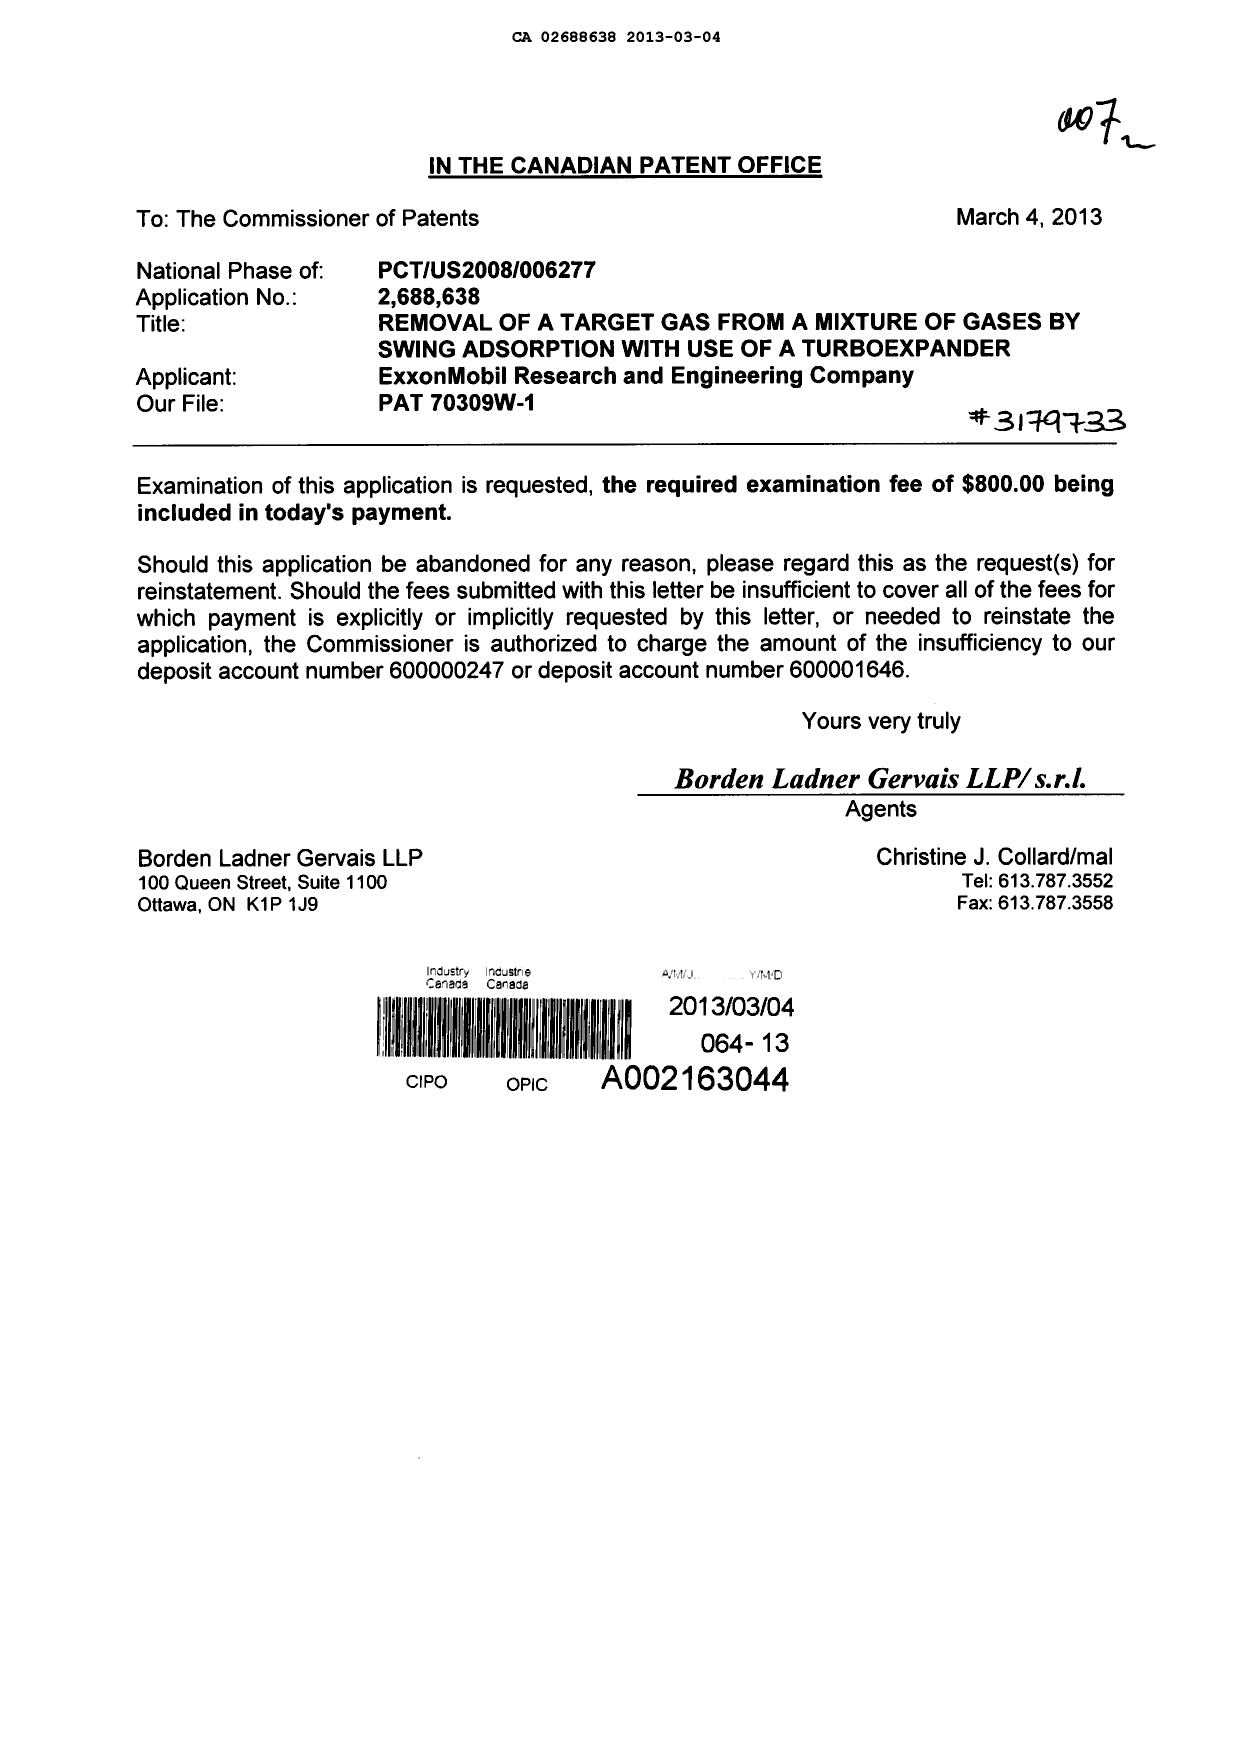 Canadian Patent Document 2688638. Prosecution-Amendment 20130304. Image 1 of 1